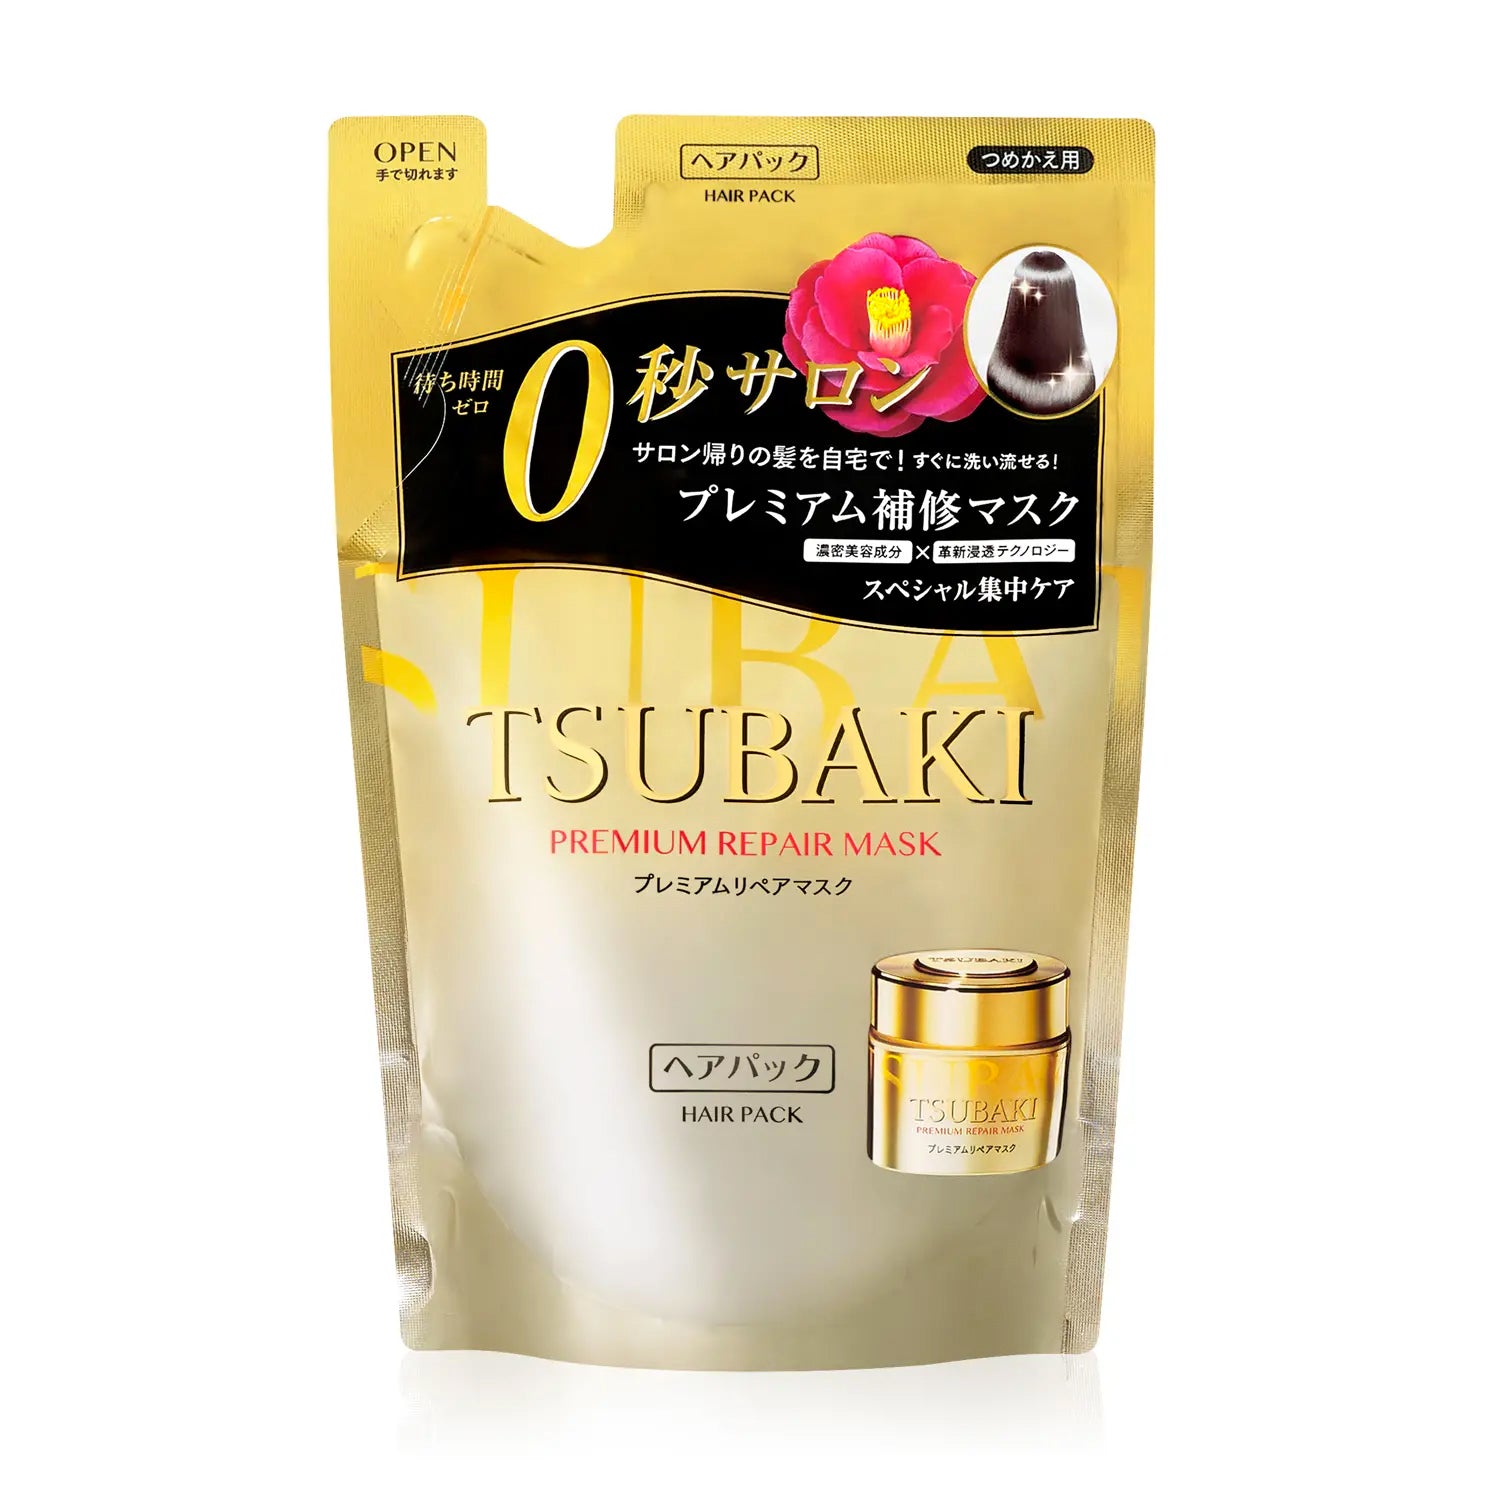 Shiseido Tsubaki Premium Repair Mask Hair Pack Refill Beauty Shiseido   